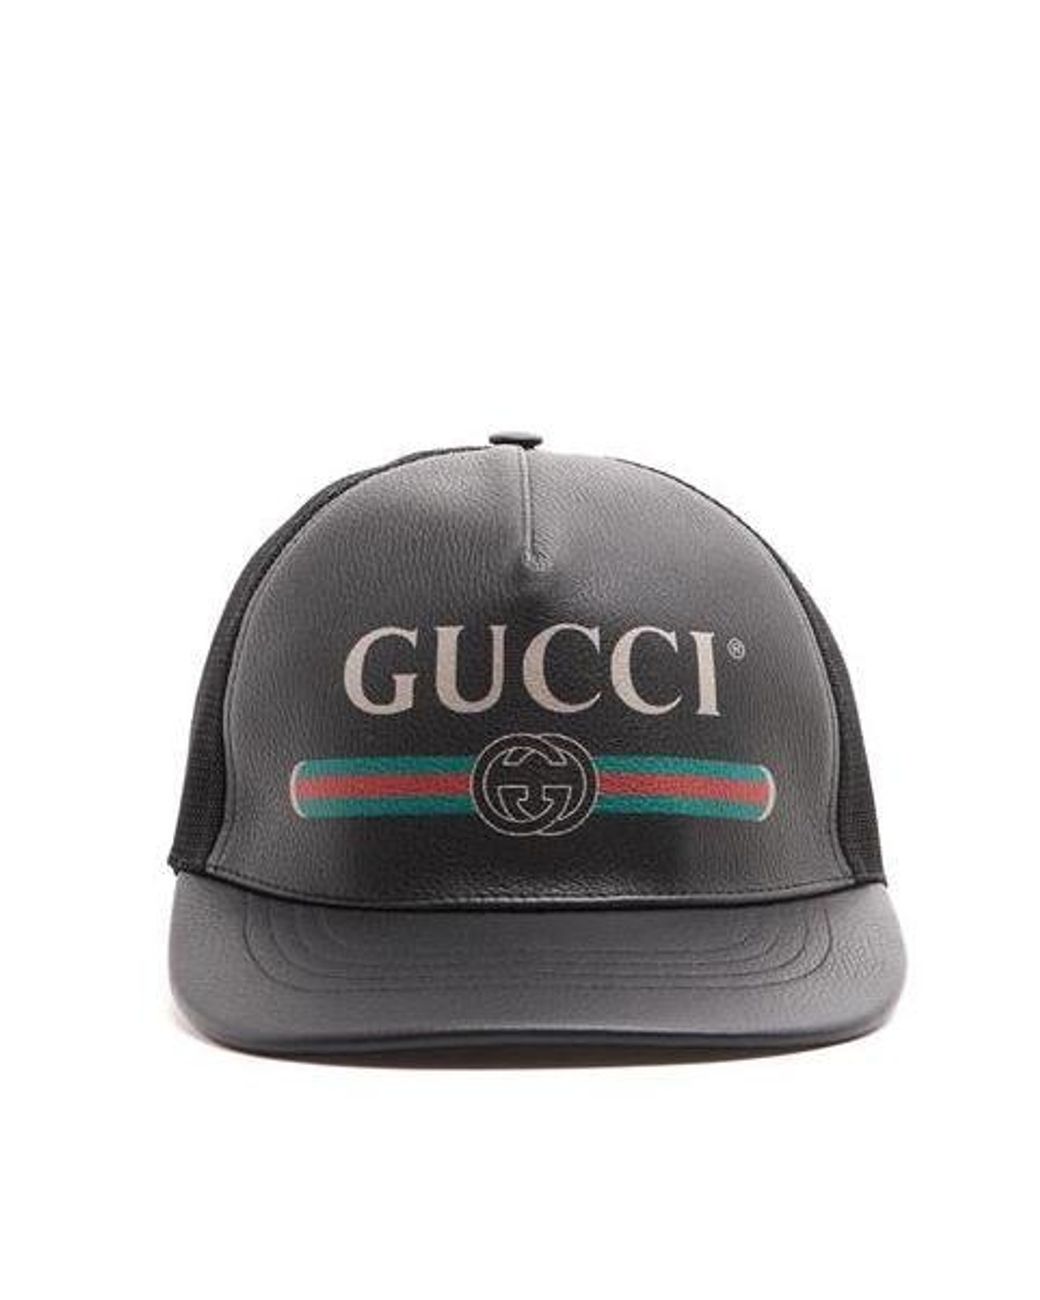 Gucci Mesh Baseball Cap in Black for Men - Lyst